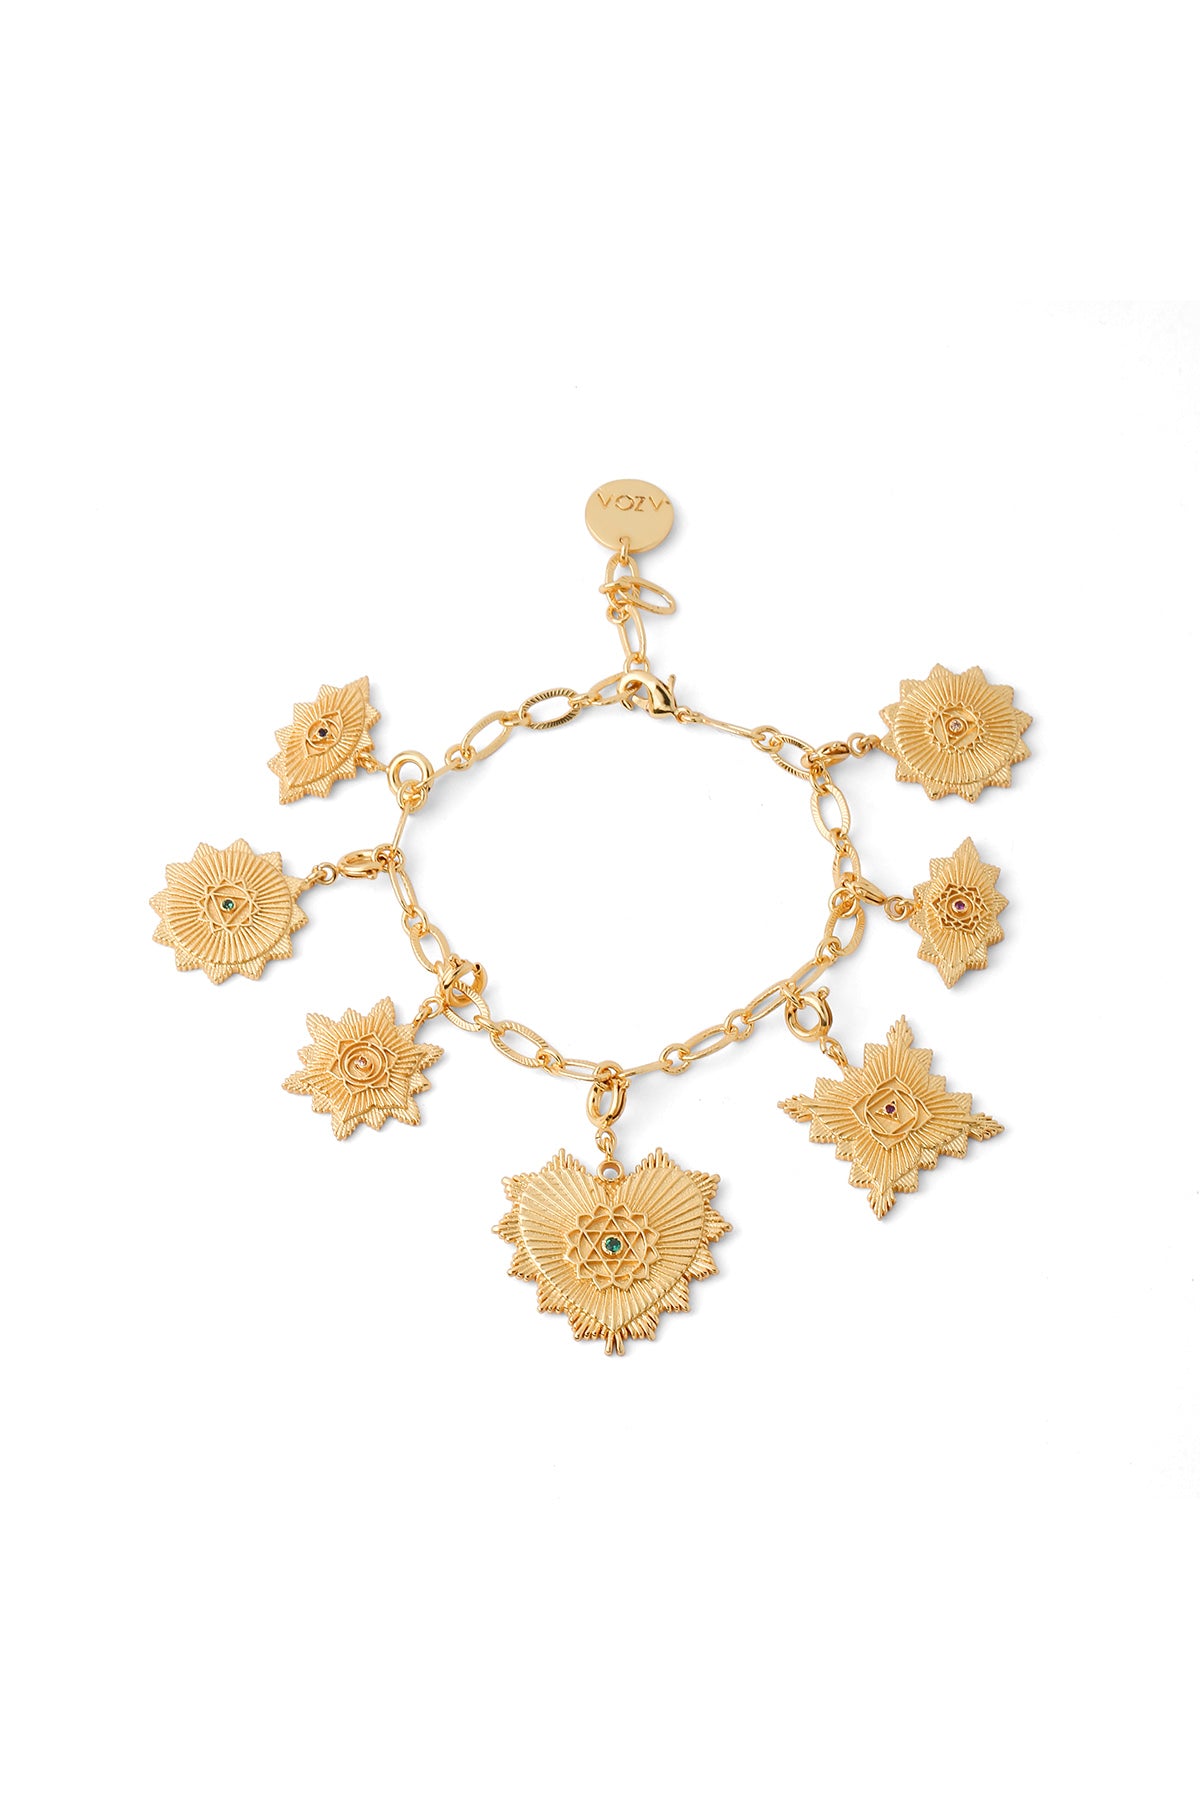 Buy Viviana 22k Yellow Gold Charm and Chain Bracelet Online | Madanji  Meghraj